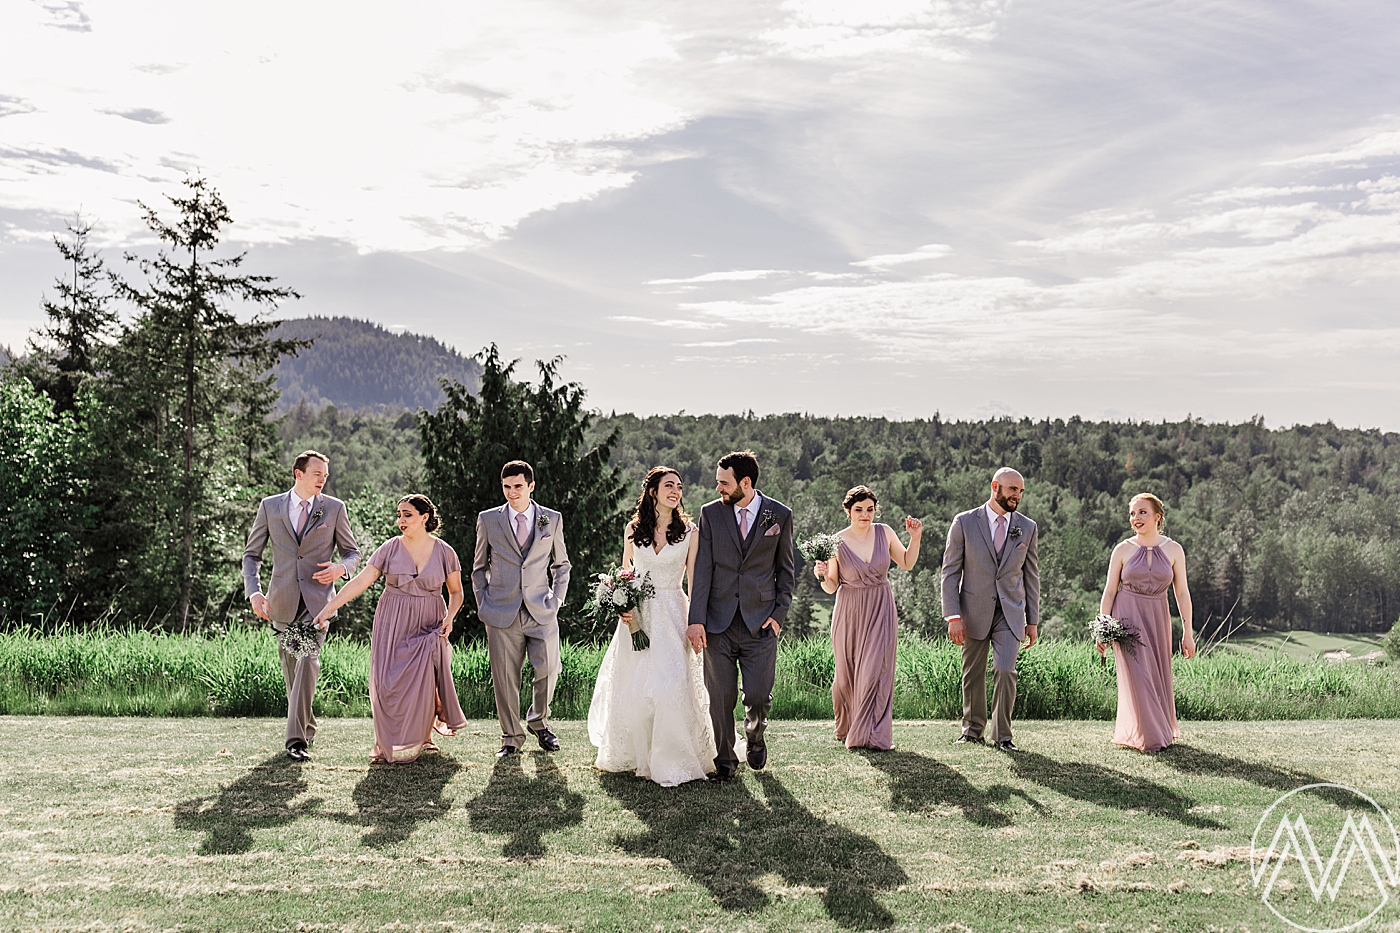 Wedding party photos at Eaglemont Golf Course. Photographed by PNW Wedding Photographer, Megan Montalvo Photography. 